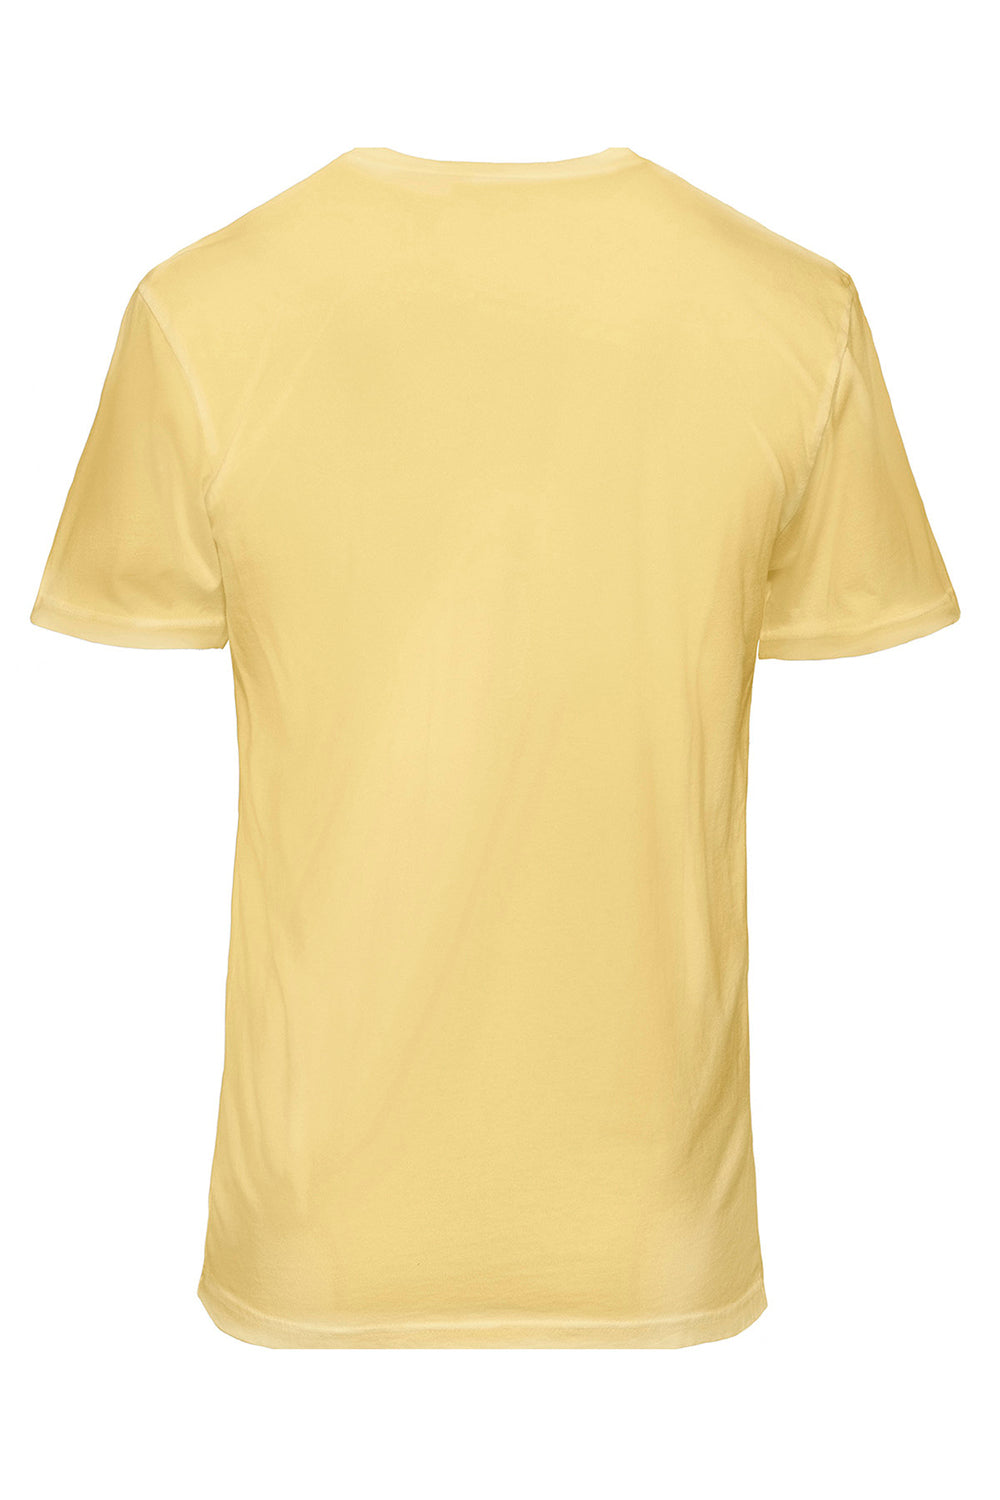 Next Level 3600SW Mens Soft Wash Short Sleeve Crewneck T-Shirt Banana Cream Yellow Flat Back